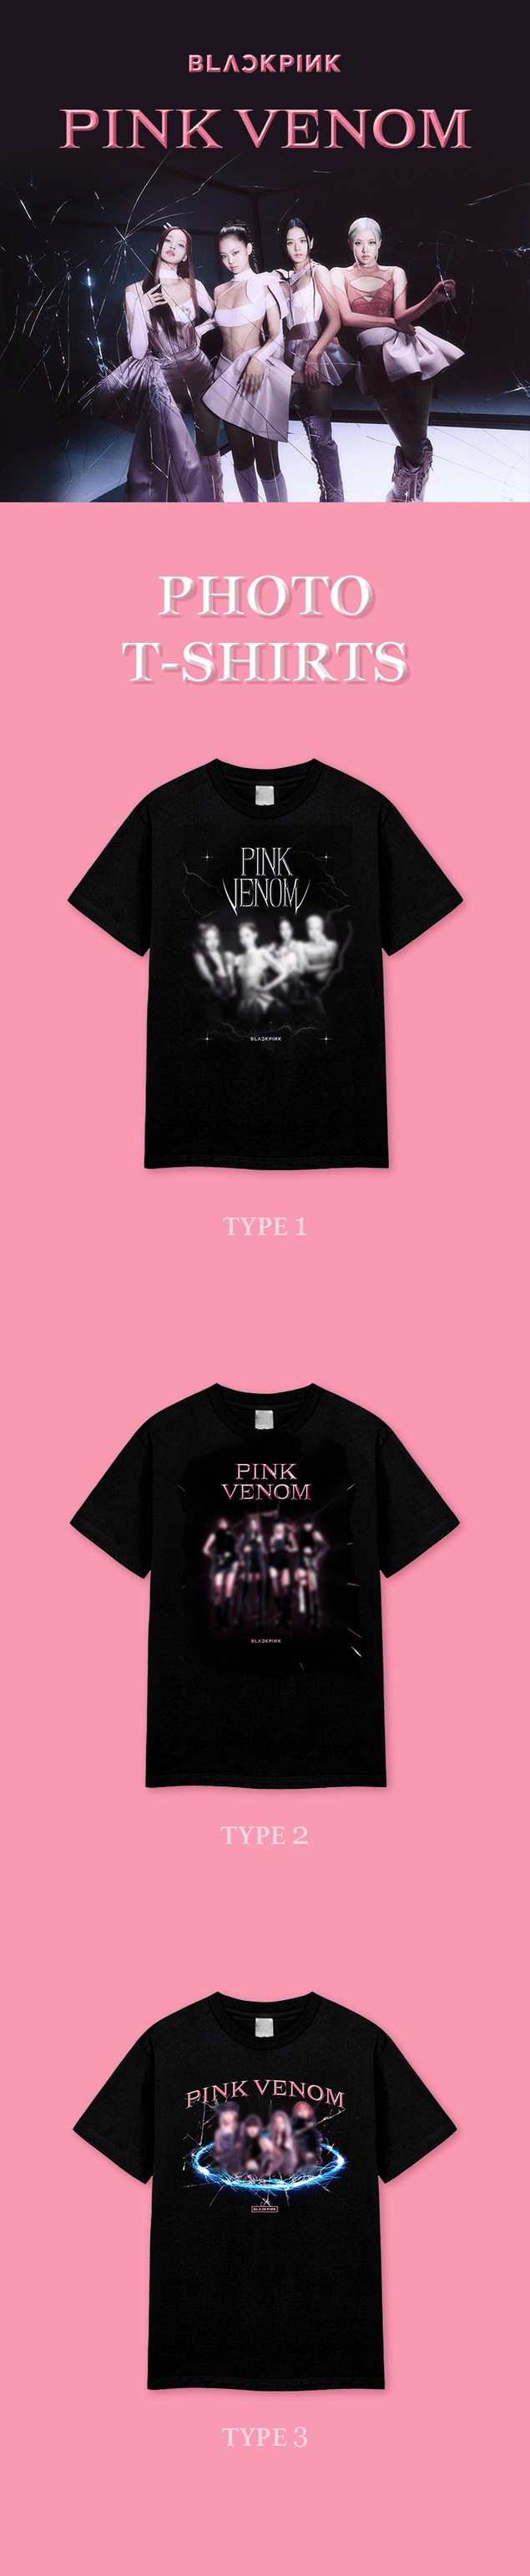 BLACKPINK [Pink Venom] Foto-T-Shirts